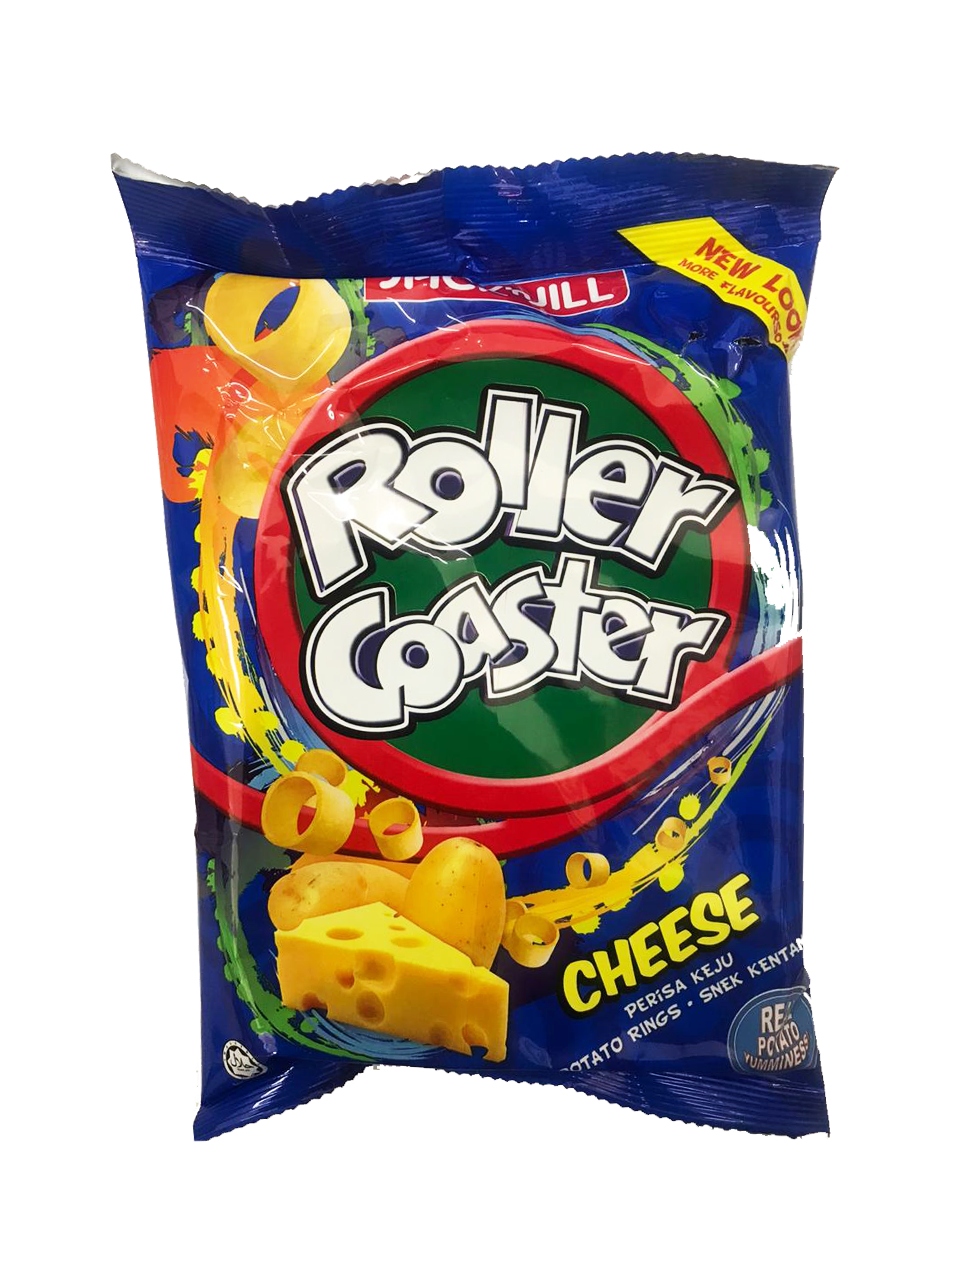 JNJ Roller Coaster Cheese New